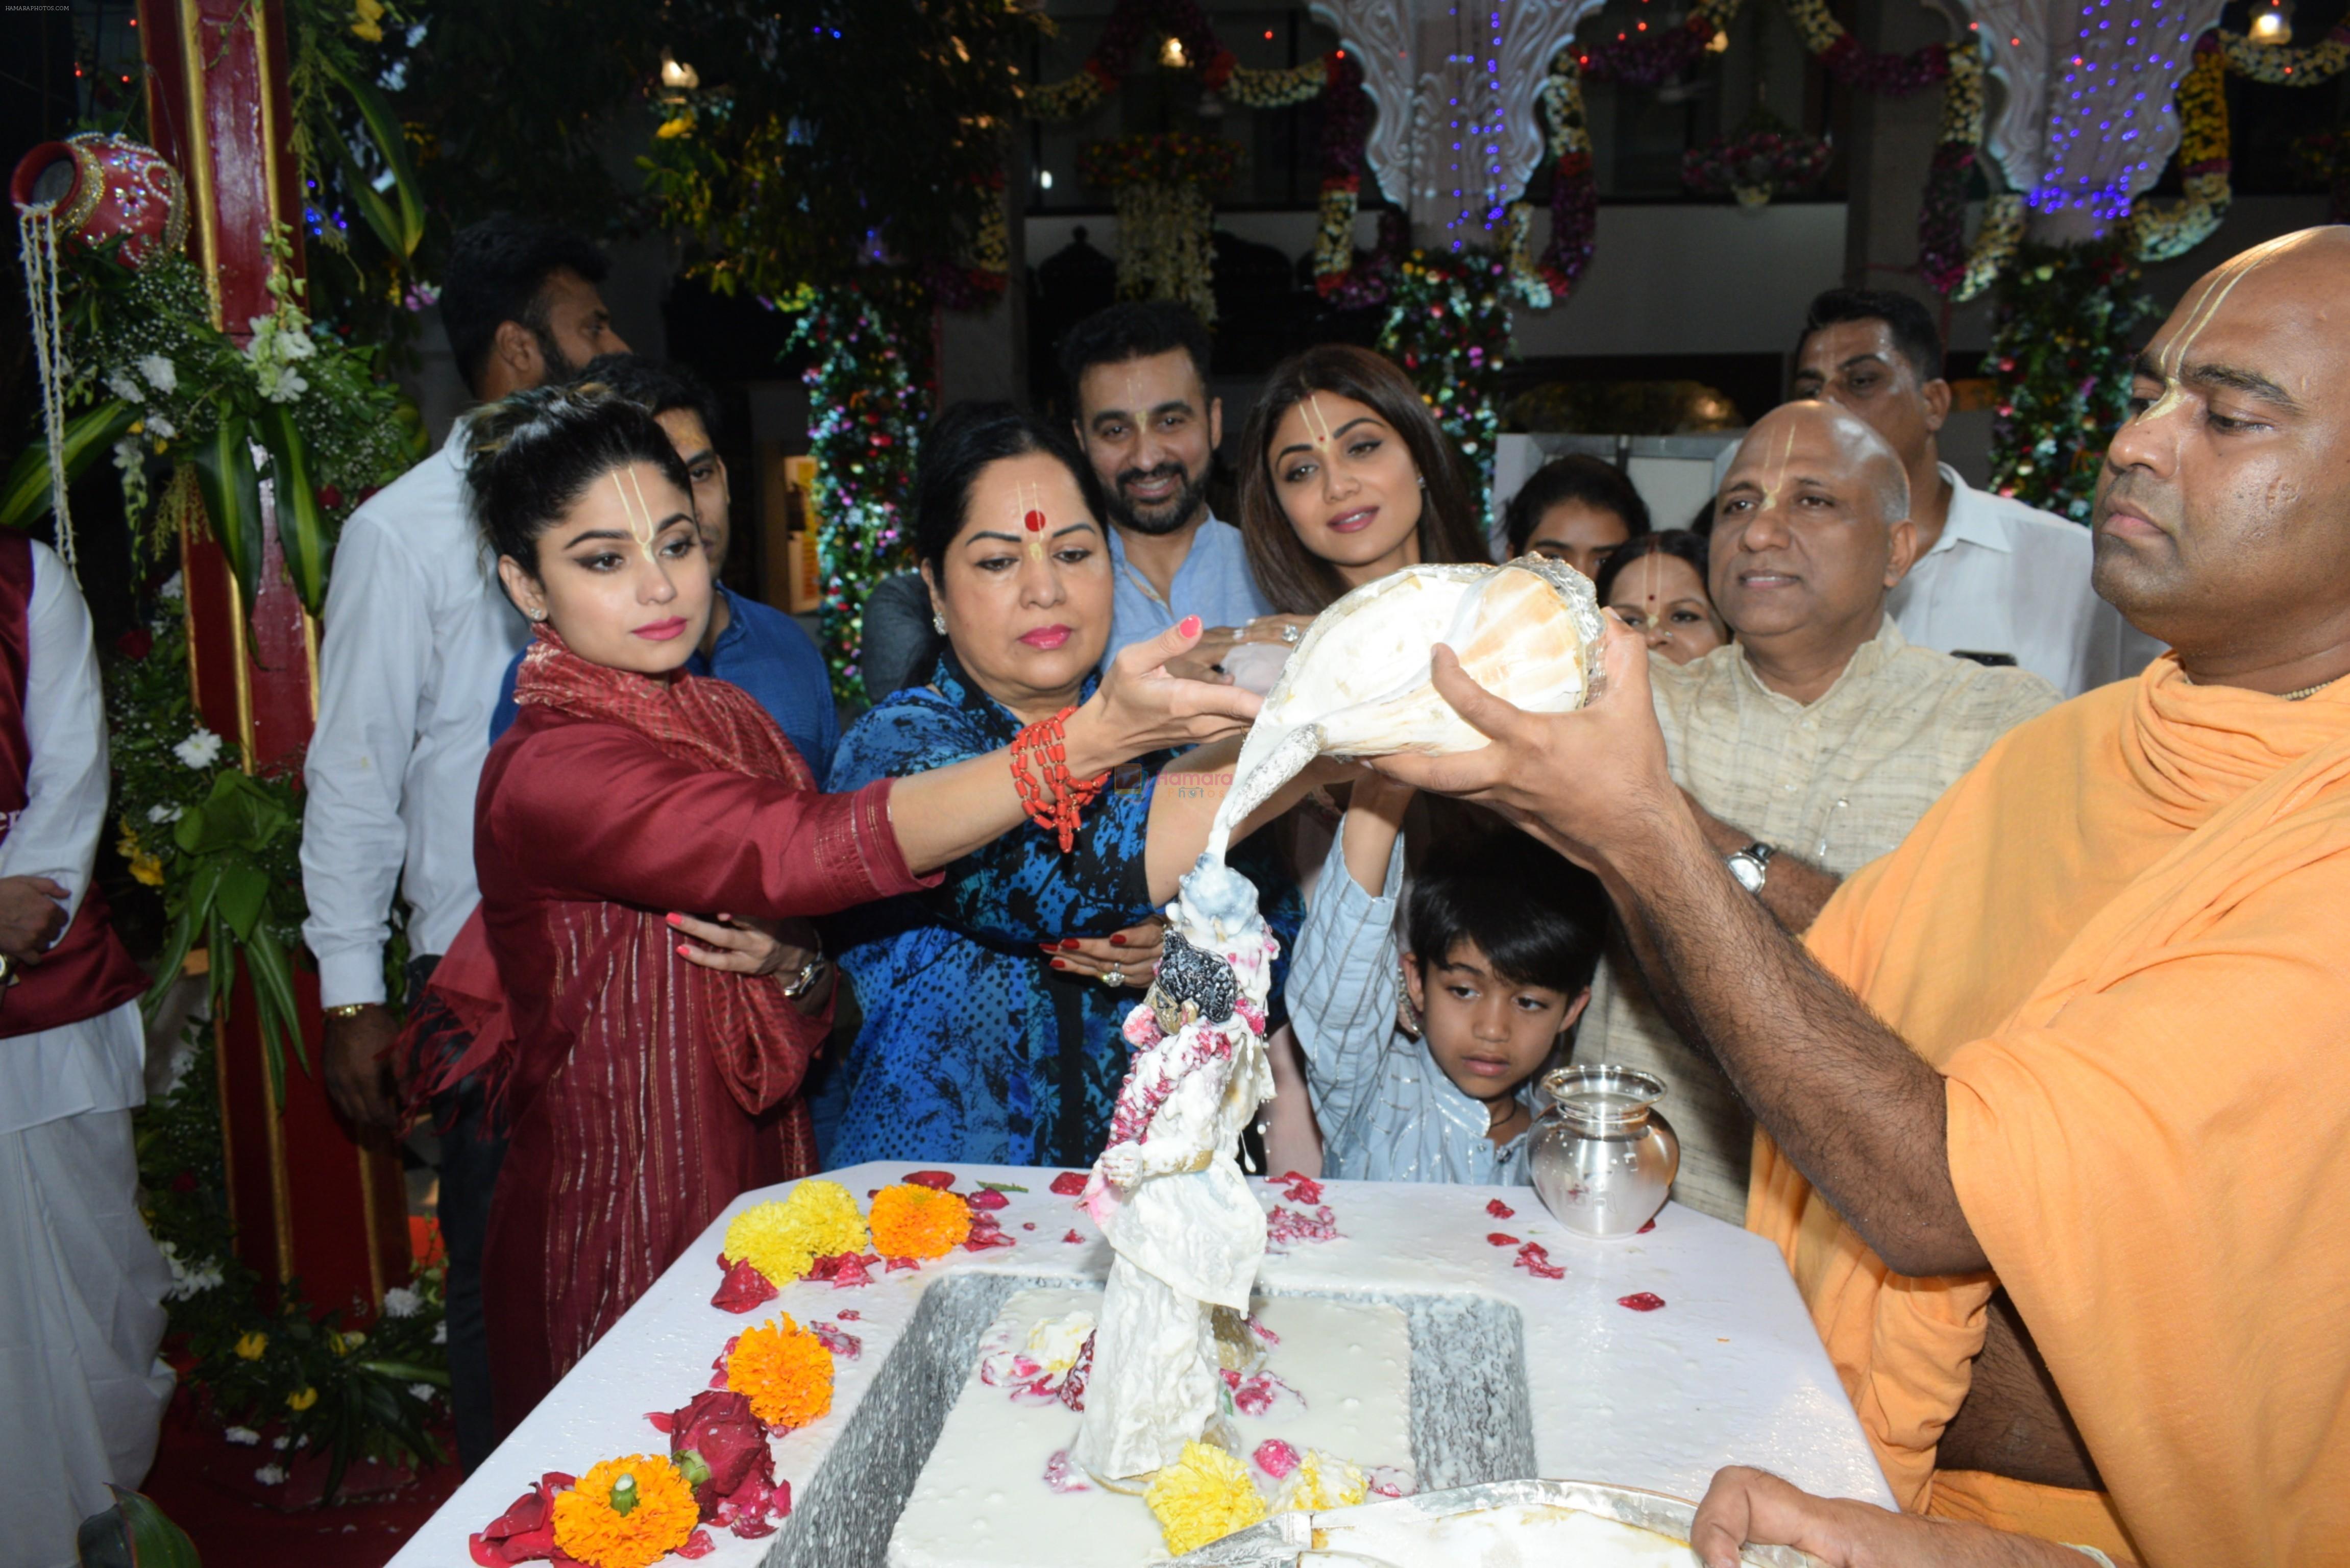 Shilpa Shetty with family at the janmashtami celebration at Iskon temple juhu on 23rd Aug 2019